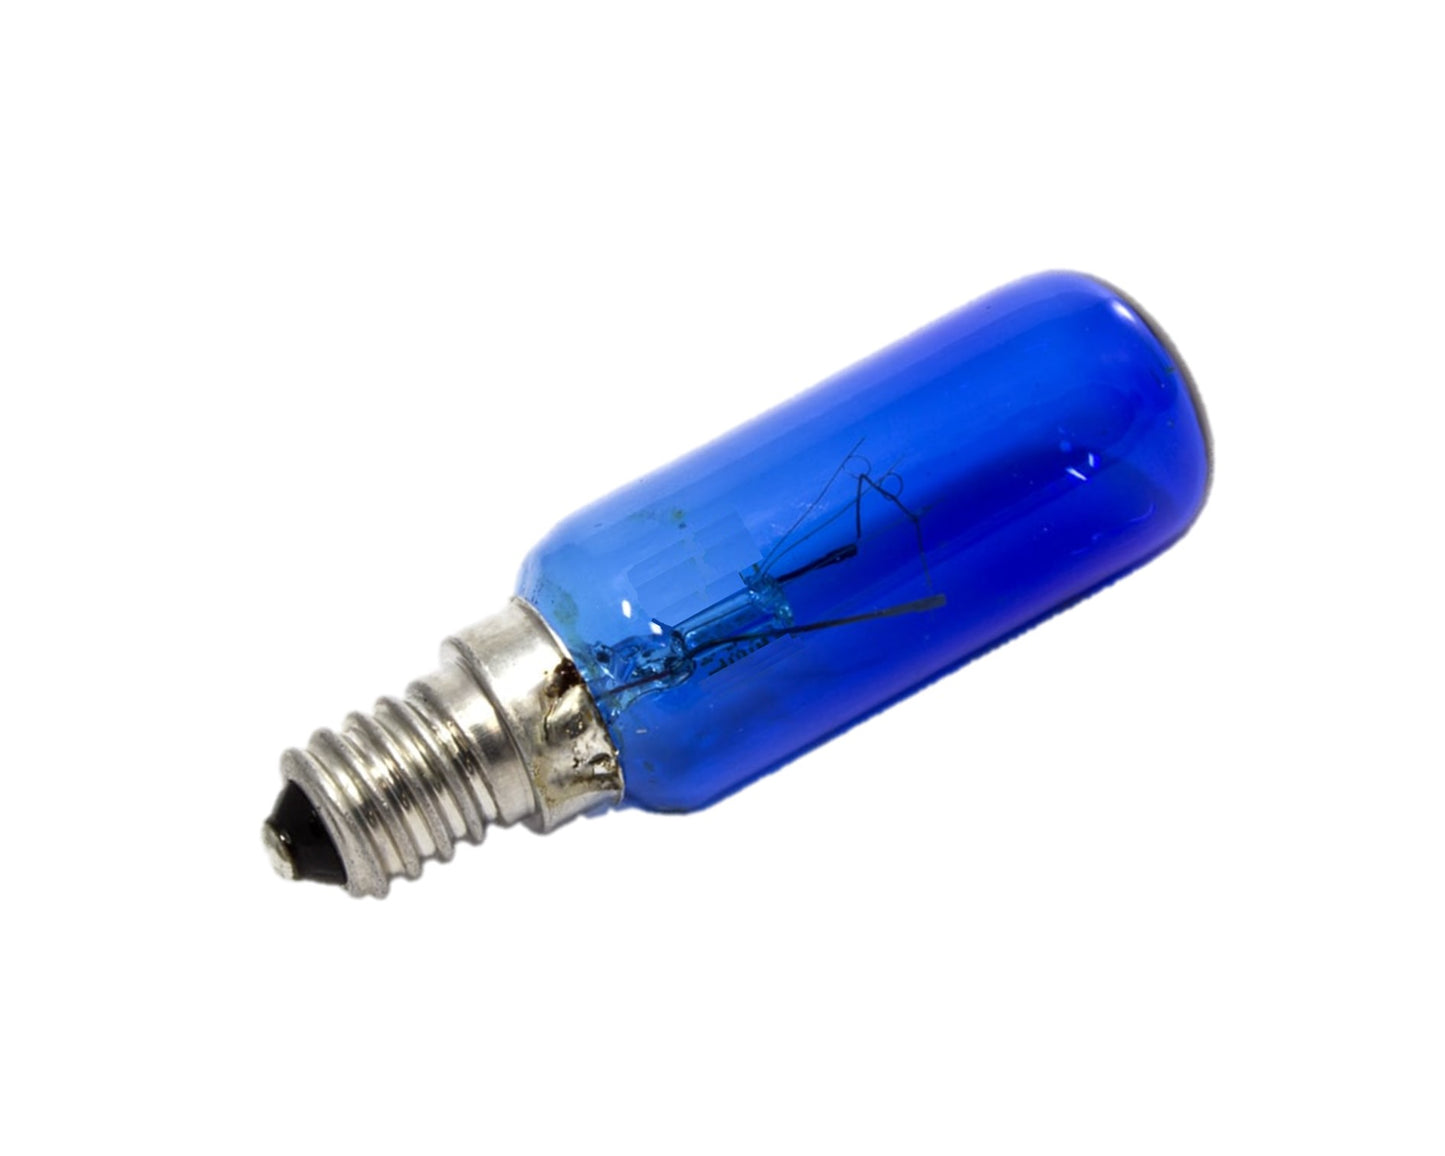 Refrigerator Fridge 'Daylight' Lamp Bulb for Neff Fridge Freezer 25W E14 SES Blue - 612235, 00612235, 625325, 00625325